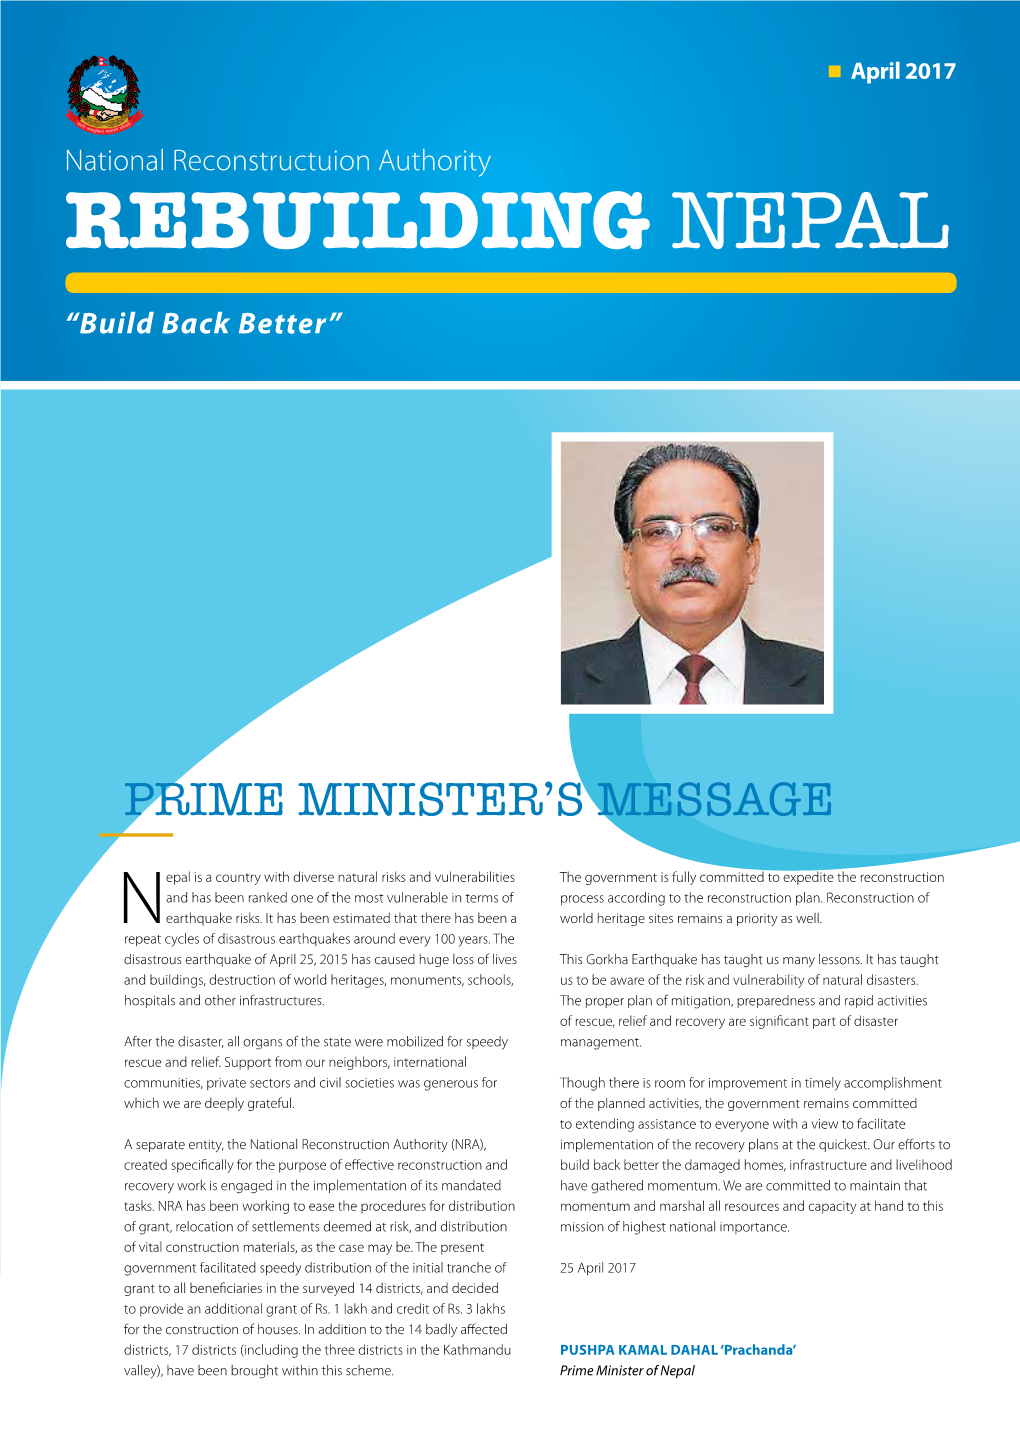 REBUILDING NEPAL “Build Back Better”